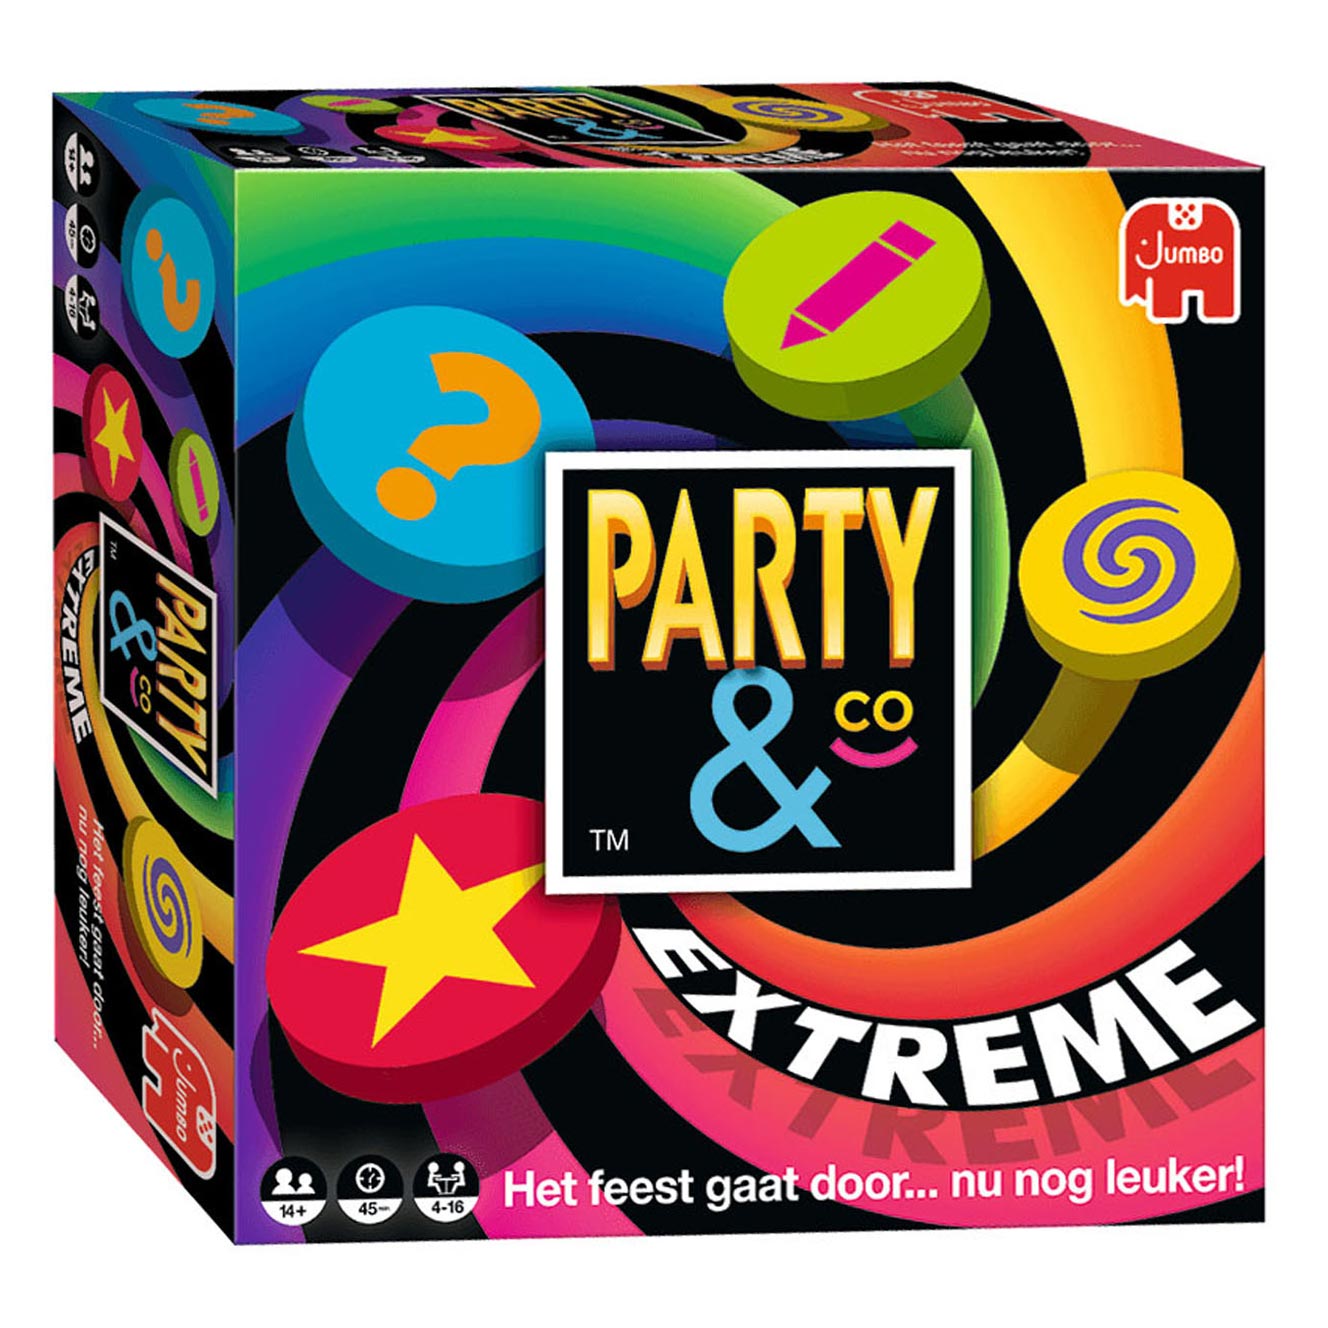 Jumbo Party & Co Extreme online | Lobbes